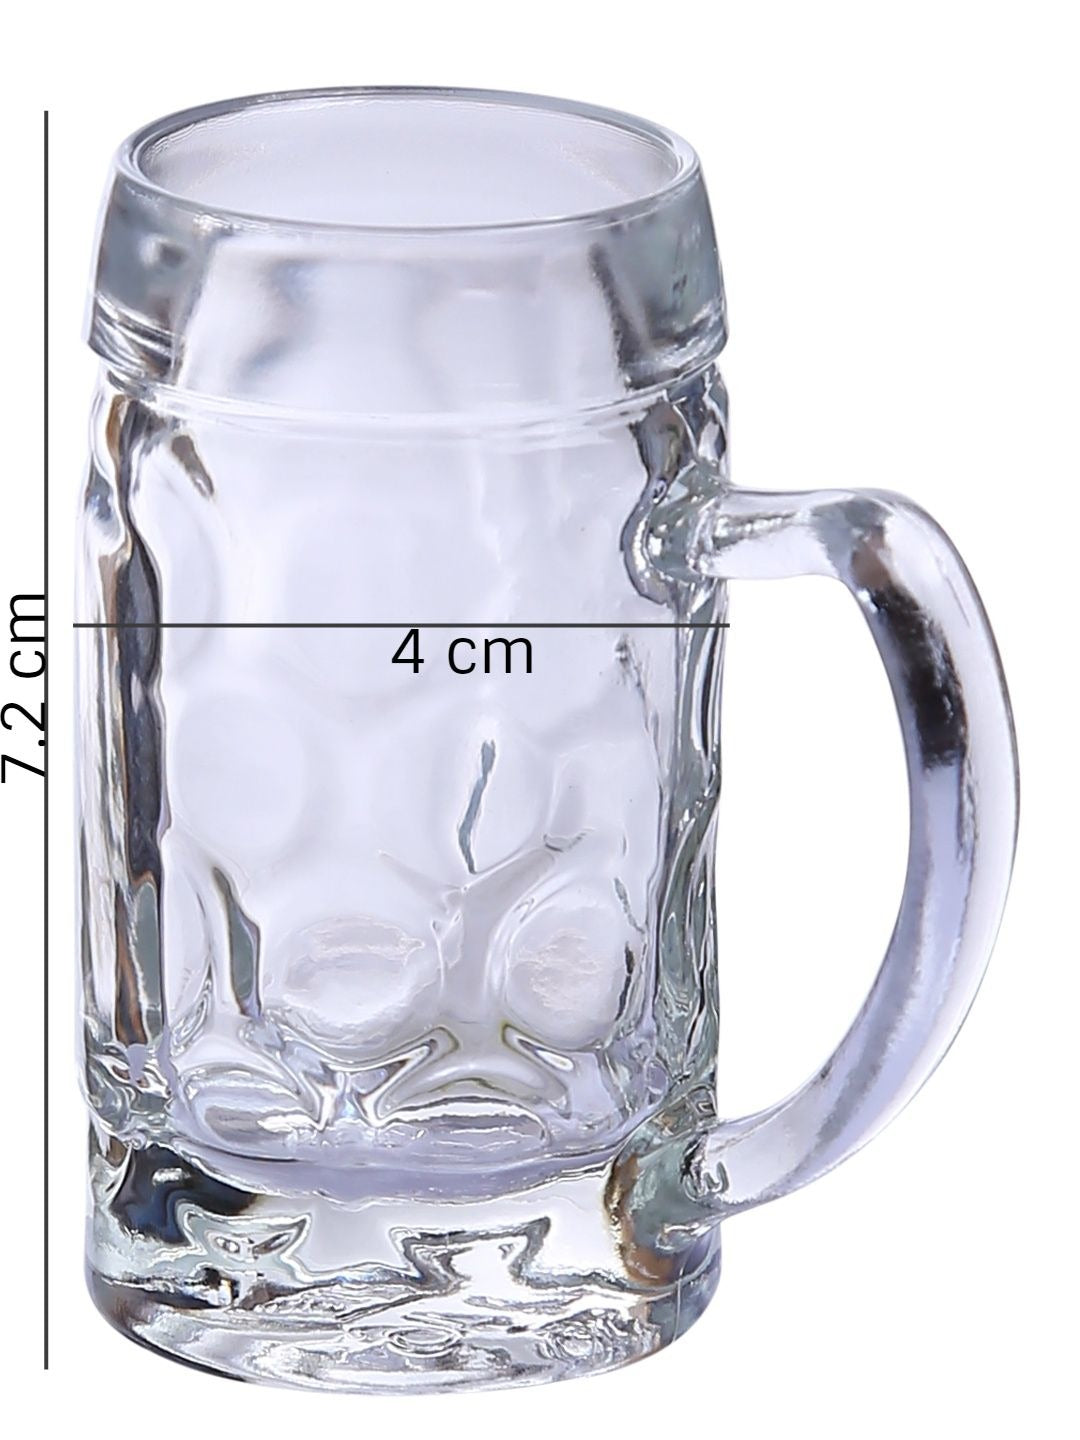 Oberglas Isar Beer Tasting Small Mugs 40 ML, Set of 3, Transparent